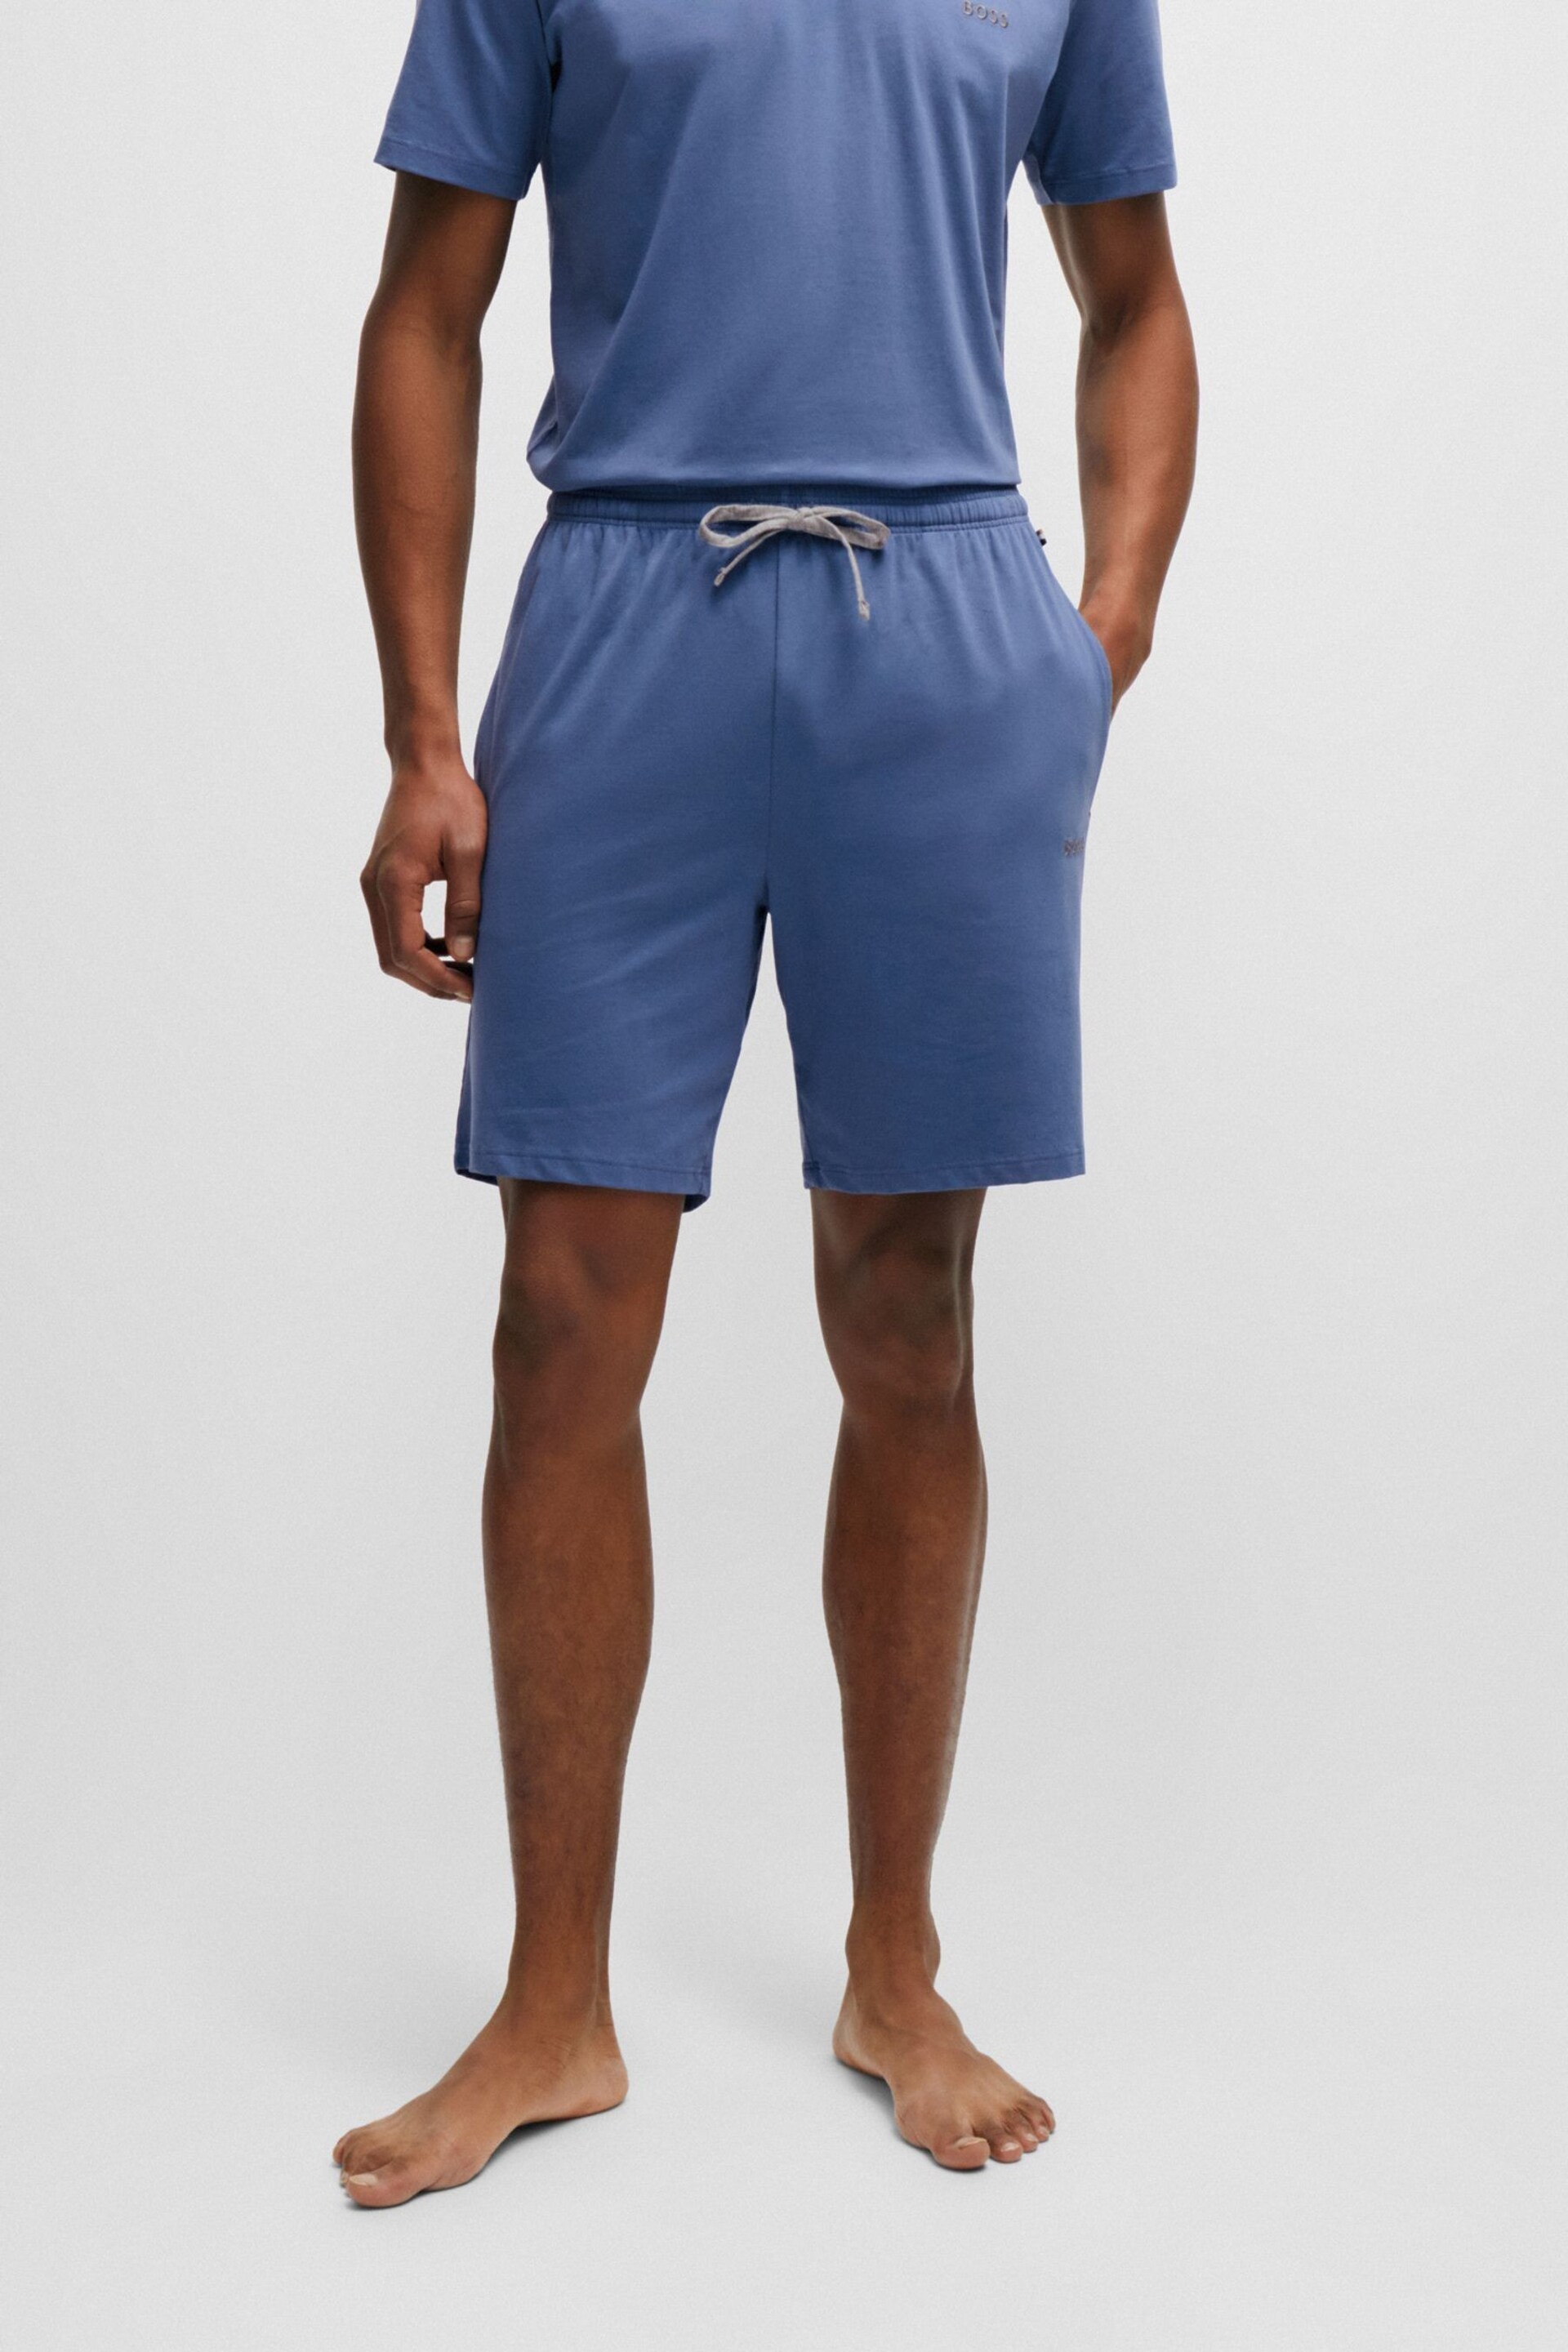 BOSS Blue Stretch Cotton Jersey Shorts - Image 1 of 2